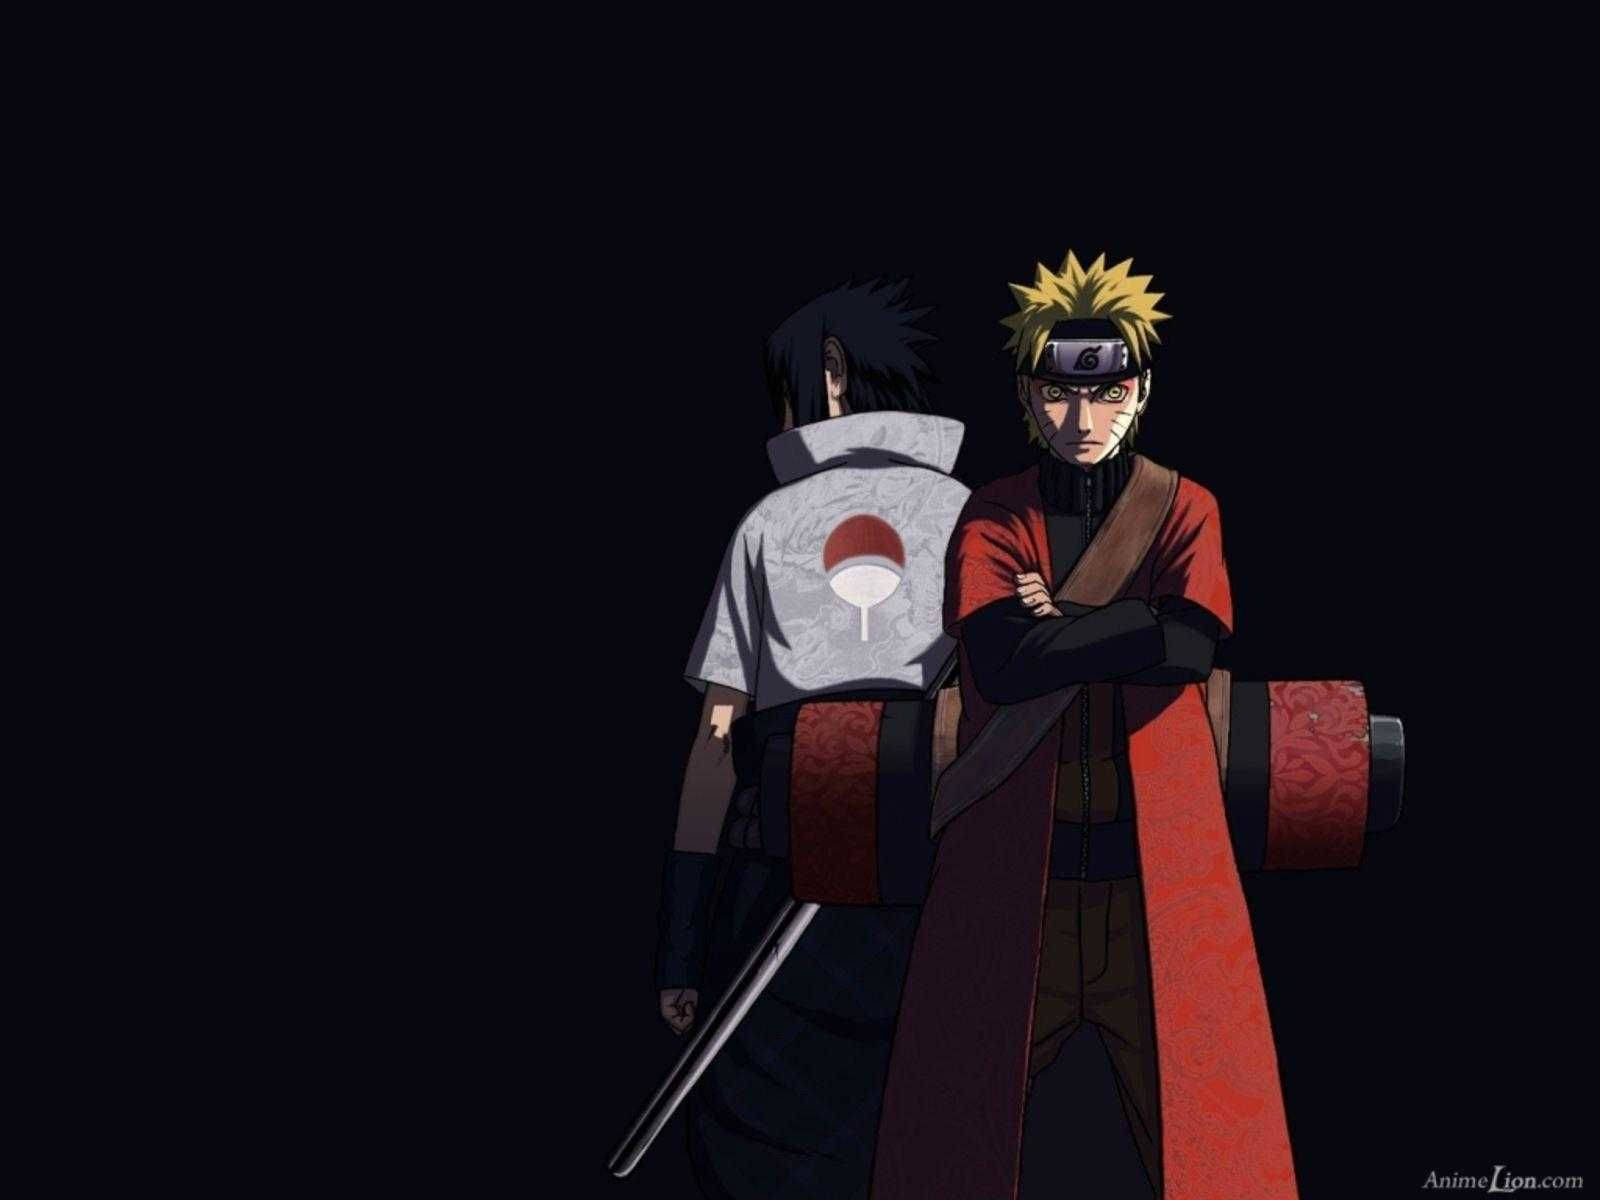 Naruto and Sasuke united in the power of black souls Wallpaper